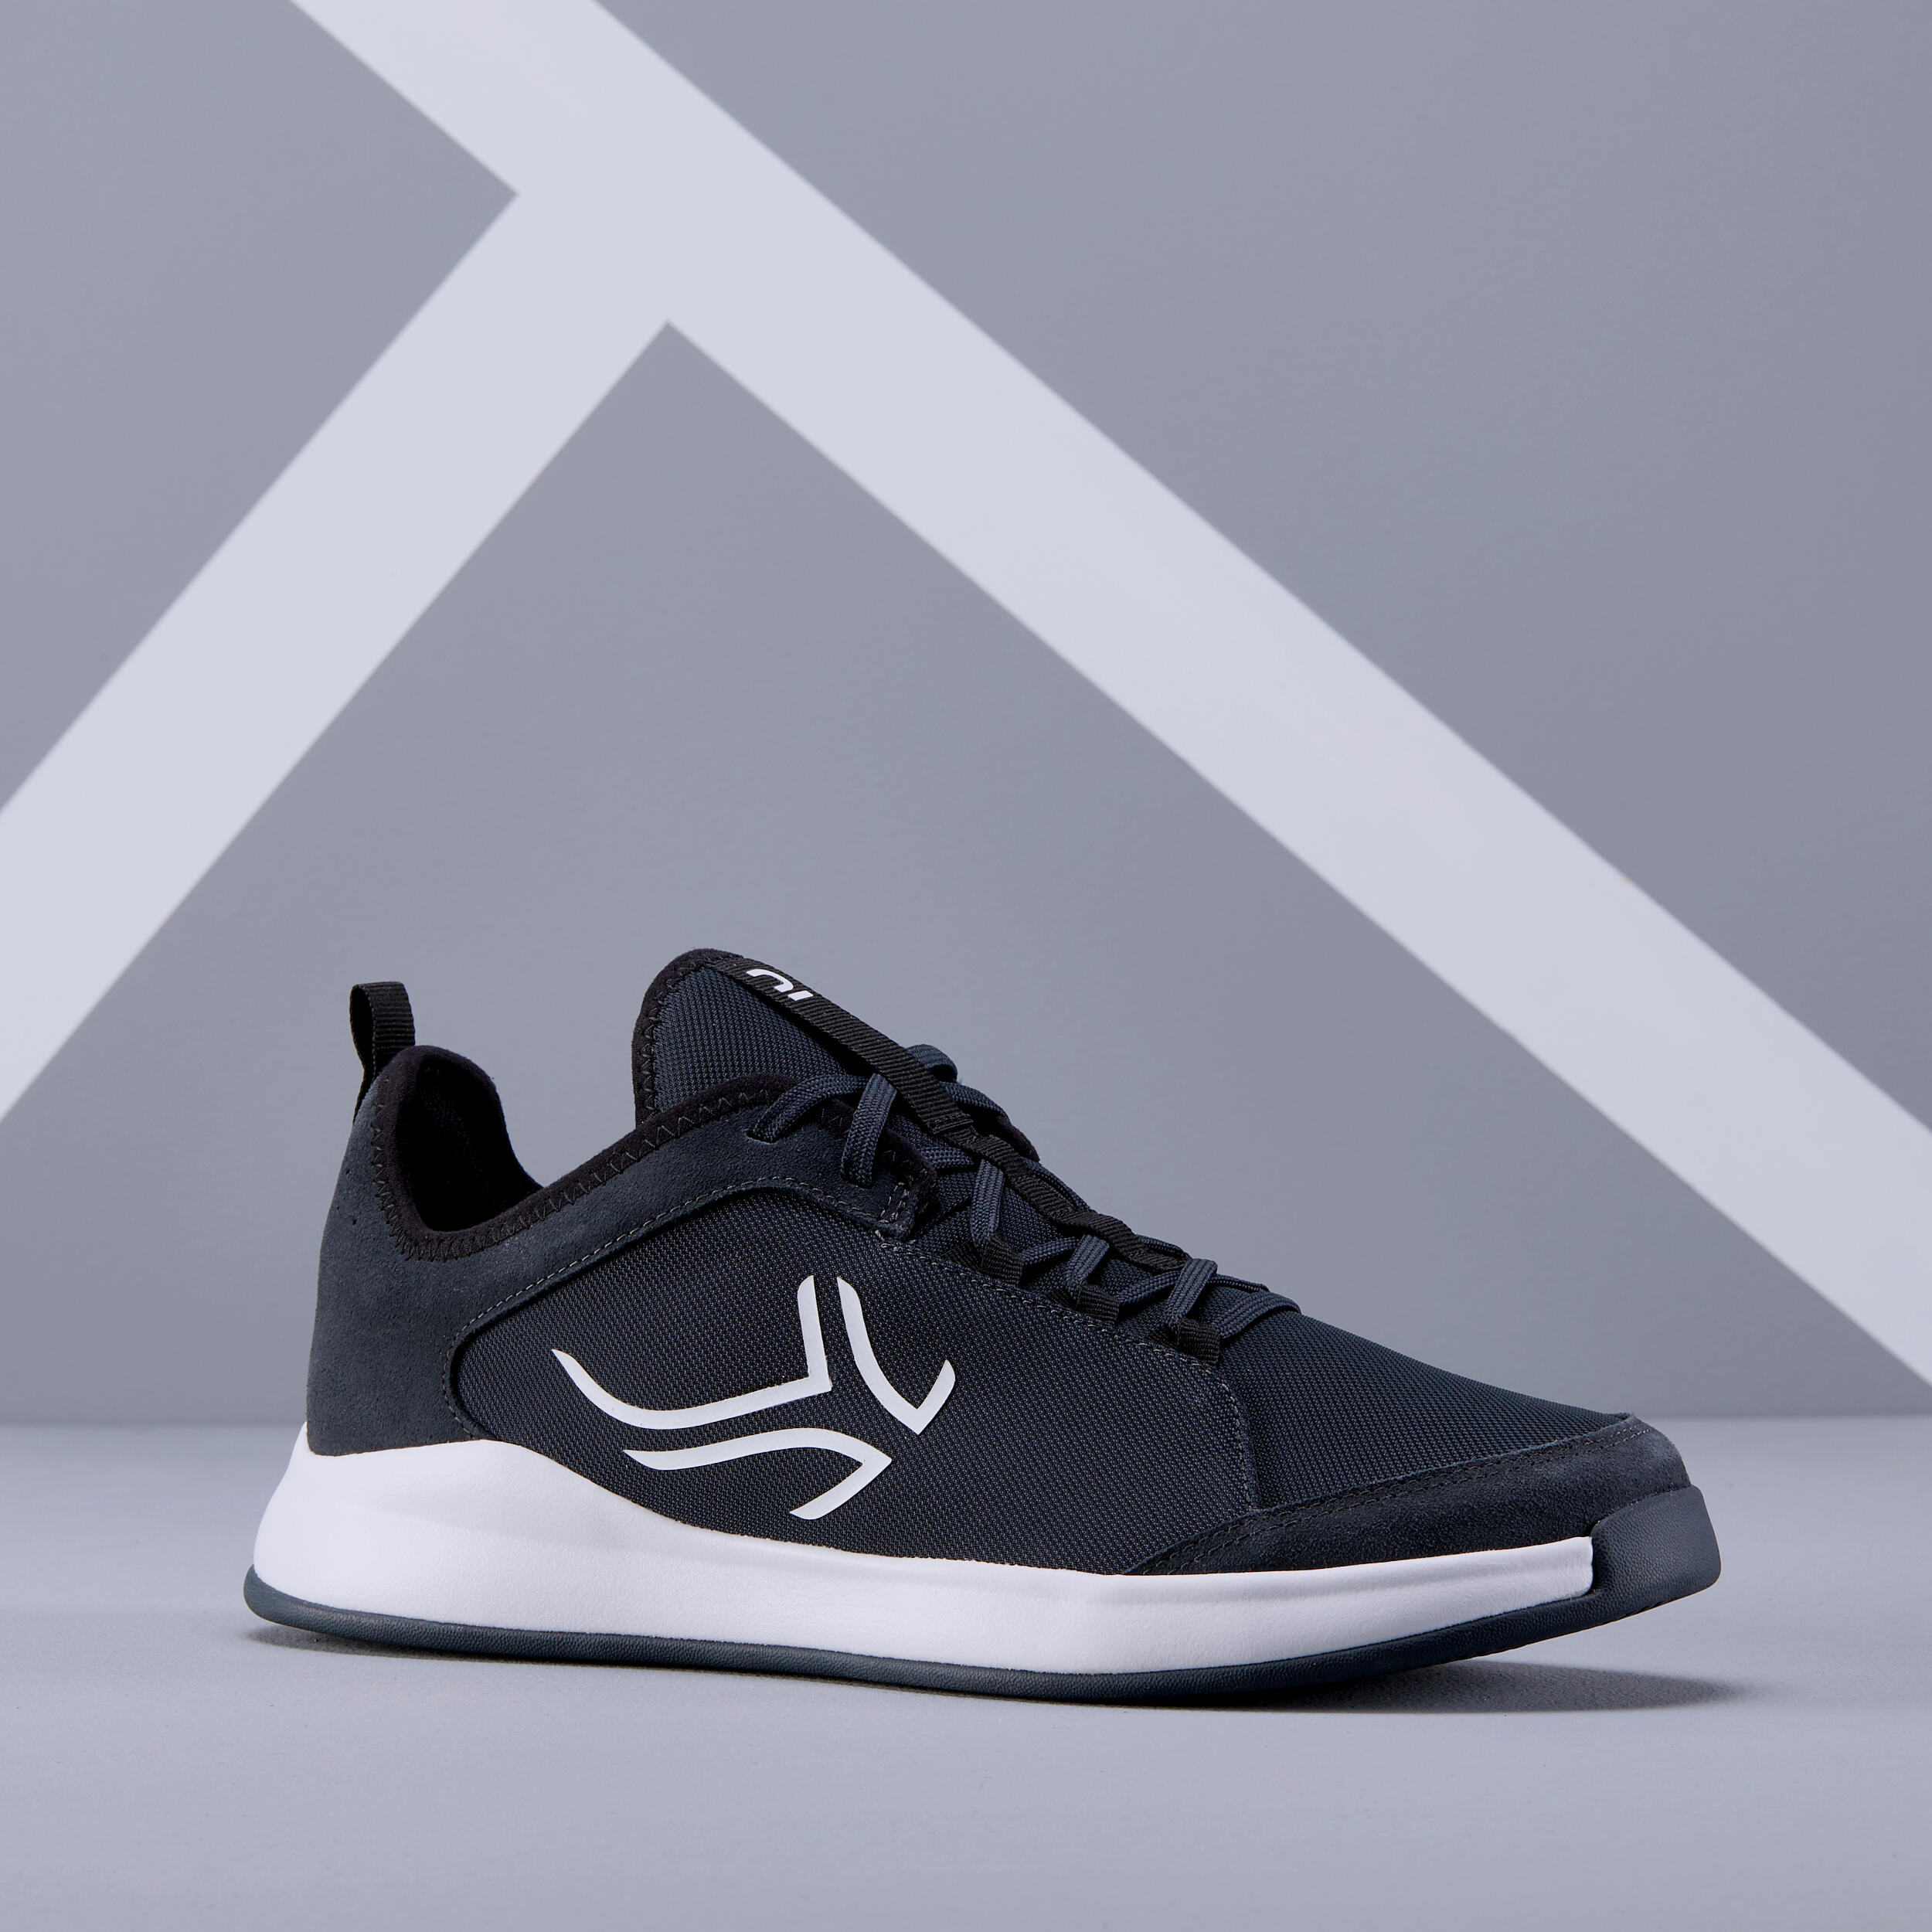 ARTENGO Men's Multicourt Tennis Shoes TS130 - Dark Grey